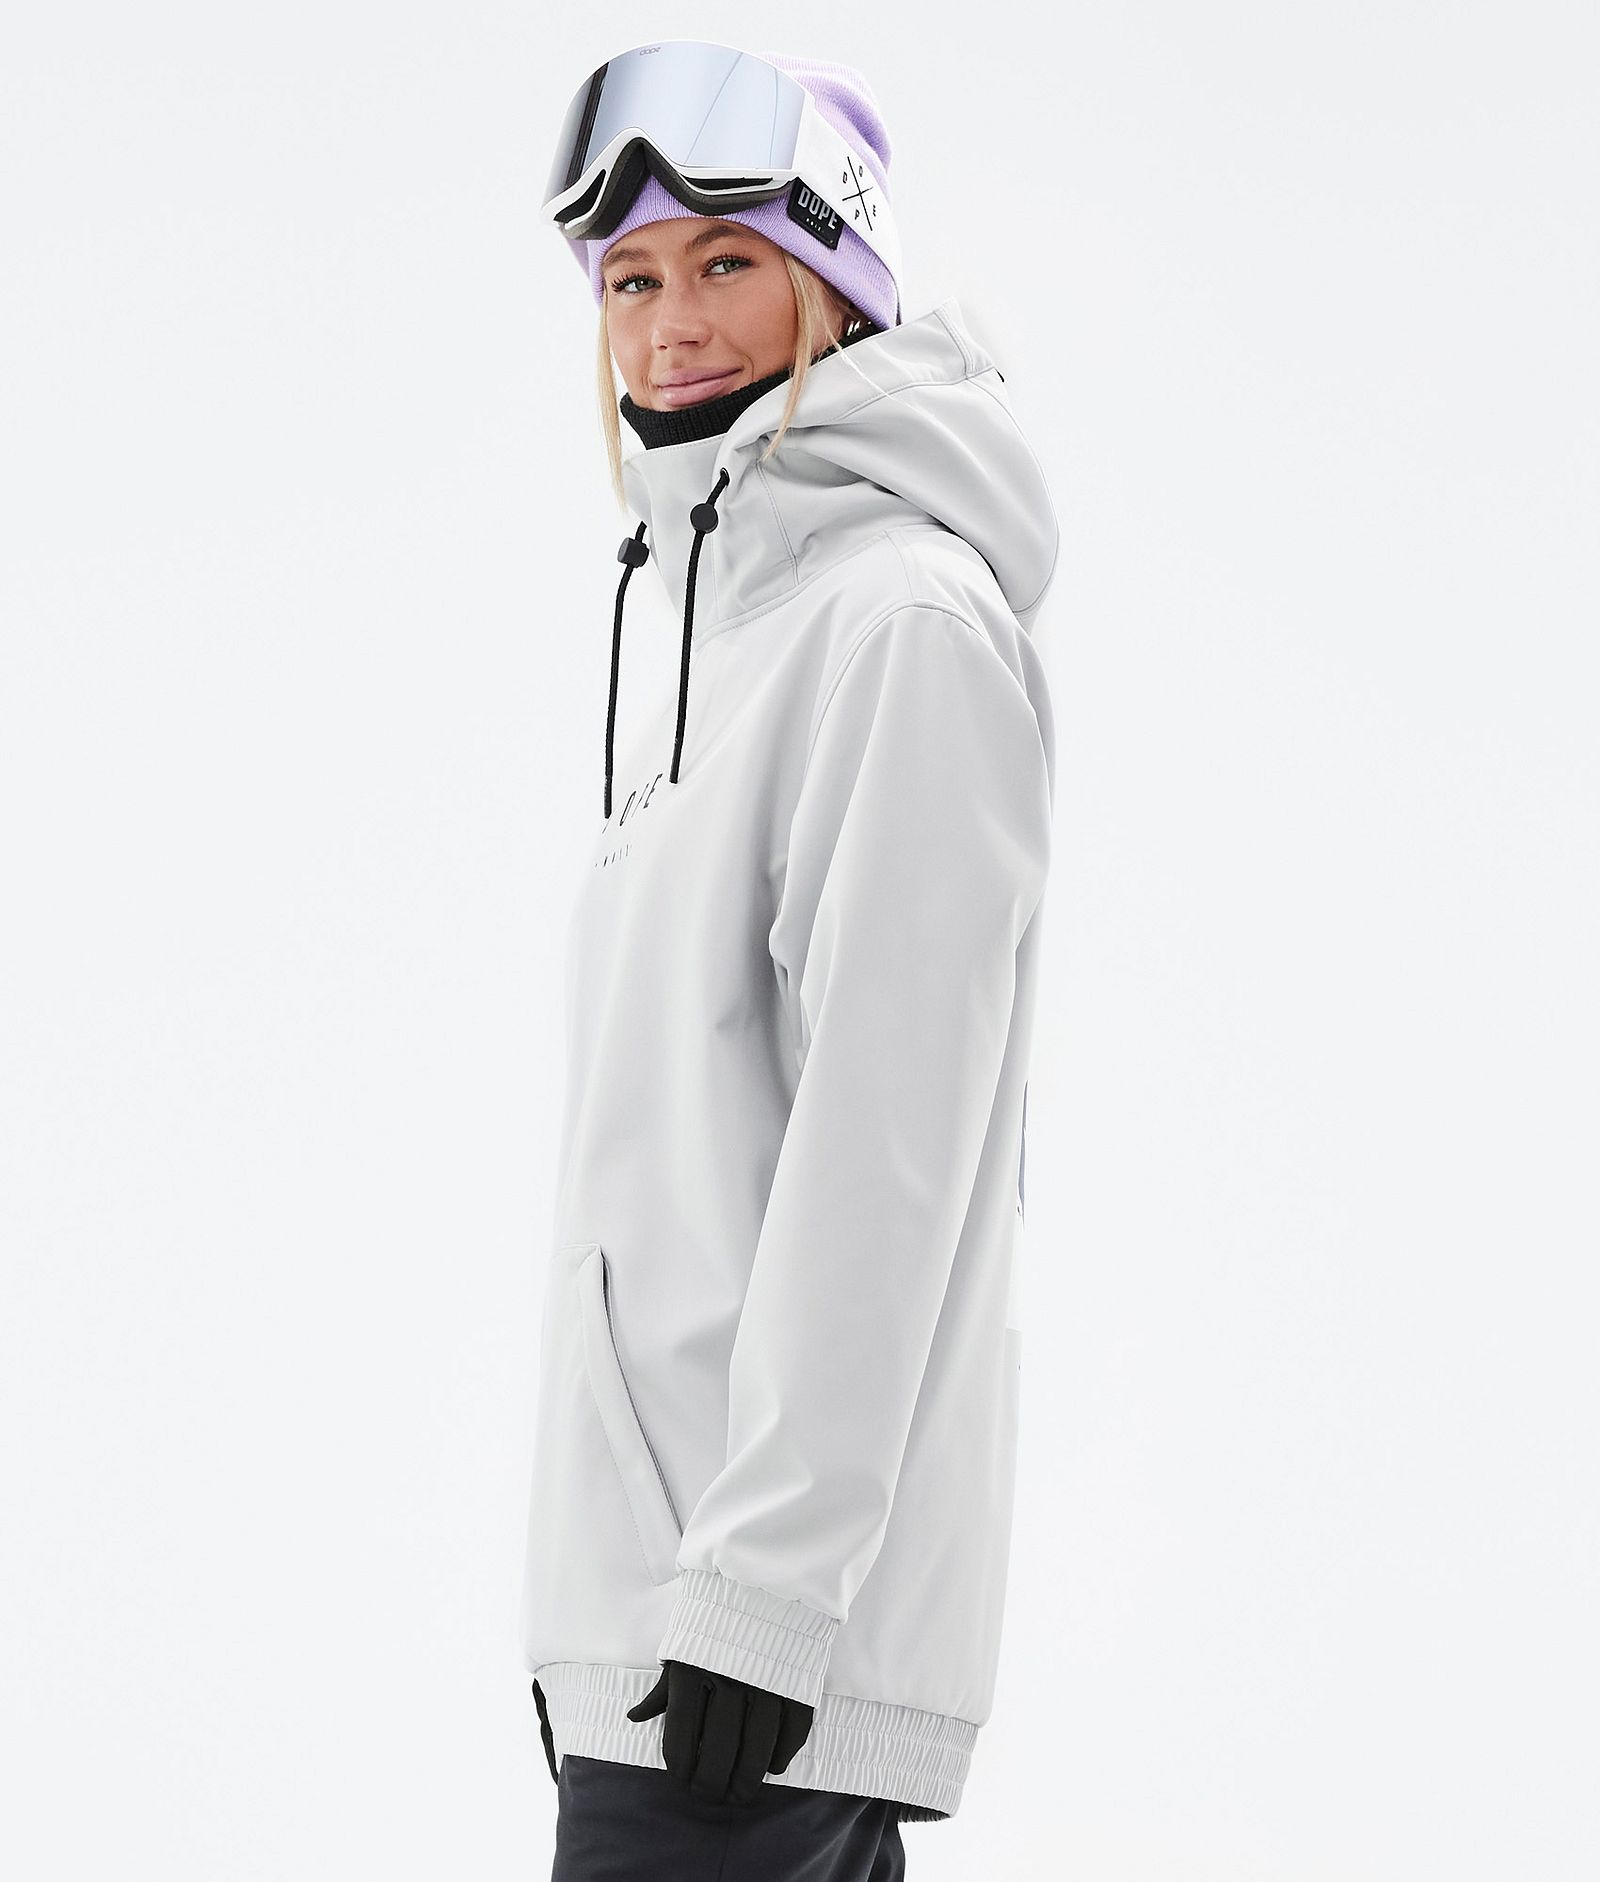 Dope Yeti W 2022 Ski Jacket Women Peak Light Grey